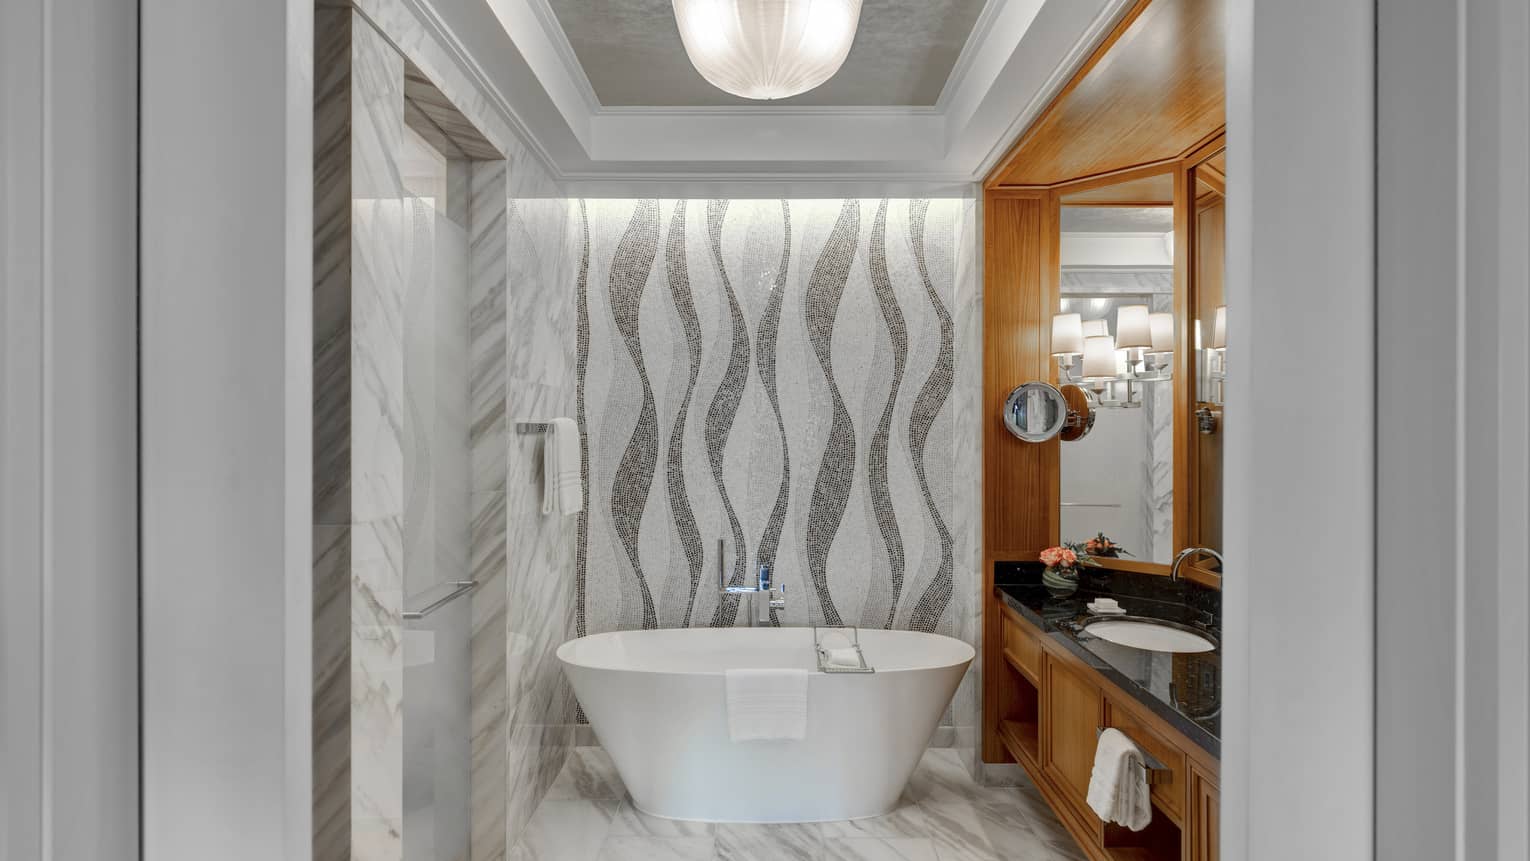 Bathroom with tiled mosaic wall, freestanding tub, vanity